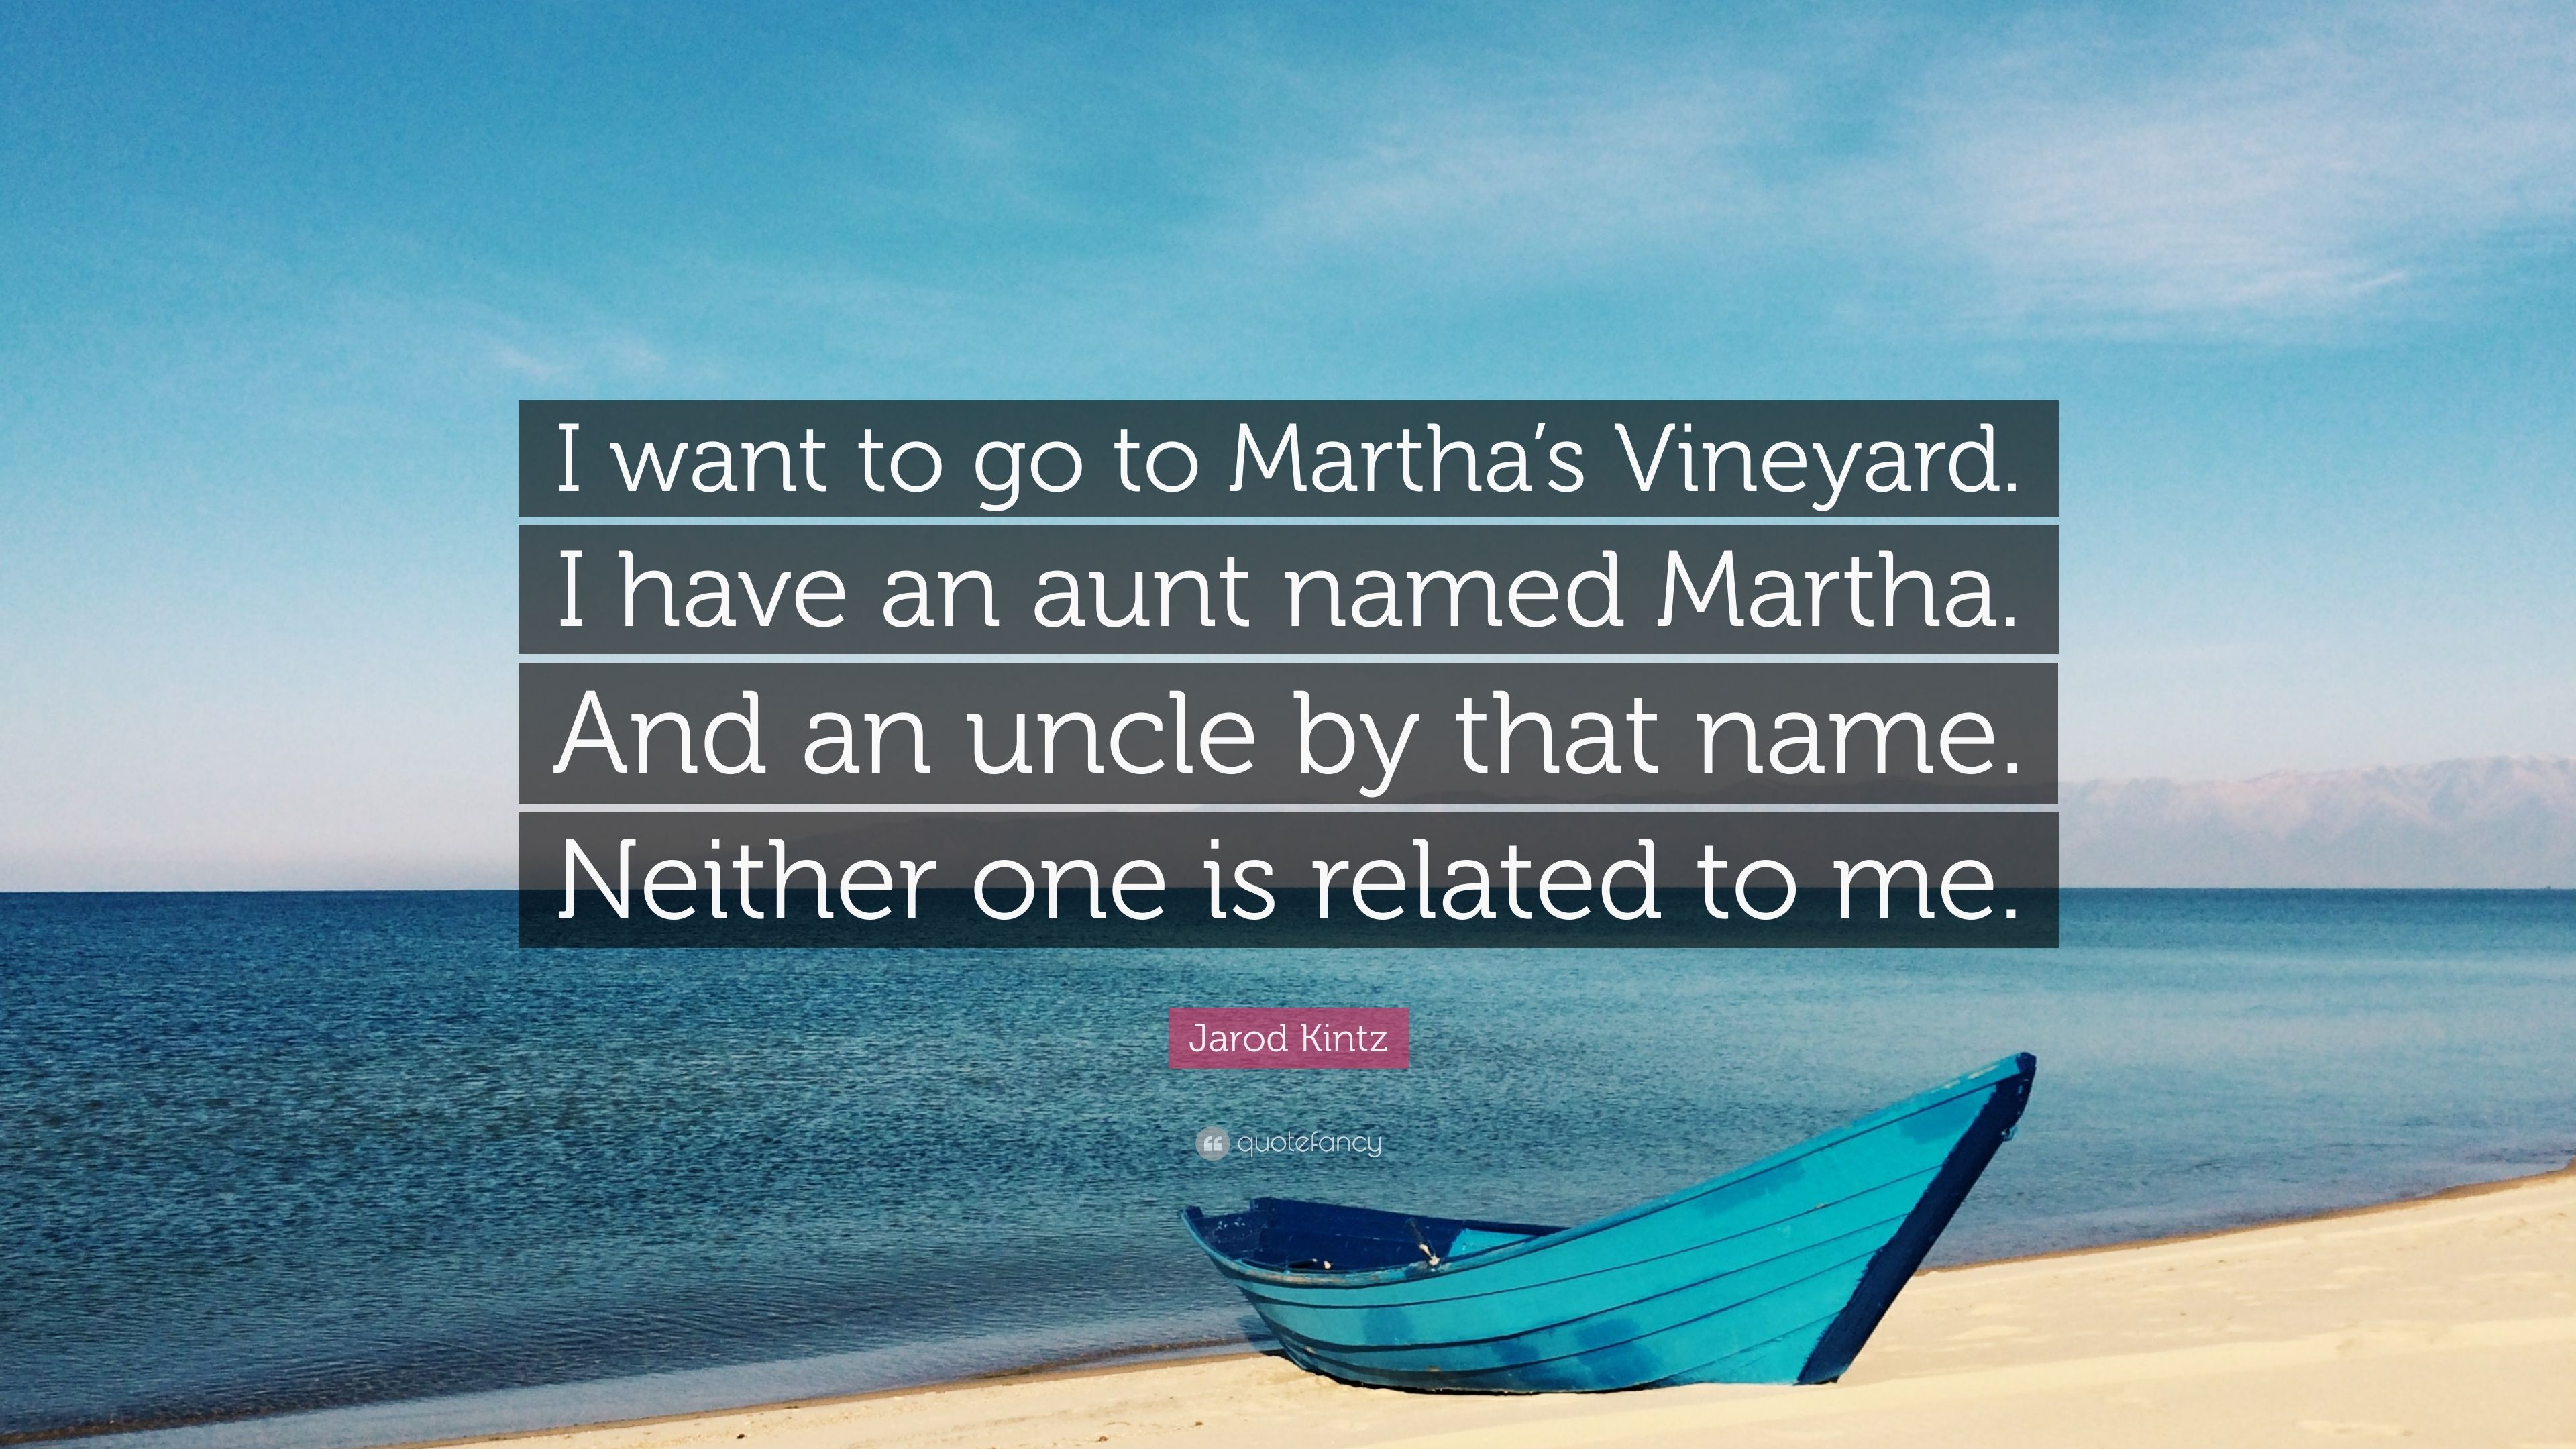 Jarod Kintz Quote: “I want to go to Martha's Vineyard. I have an